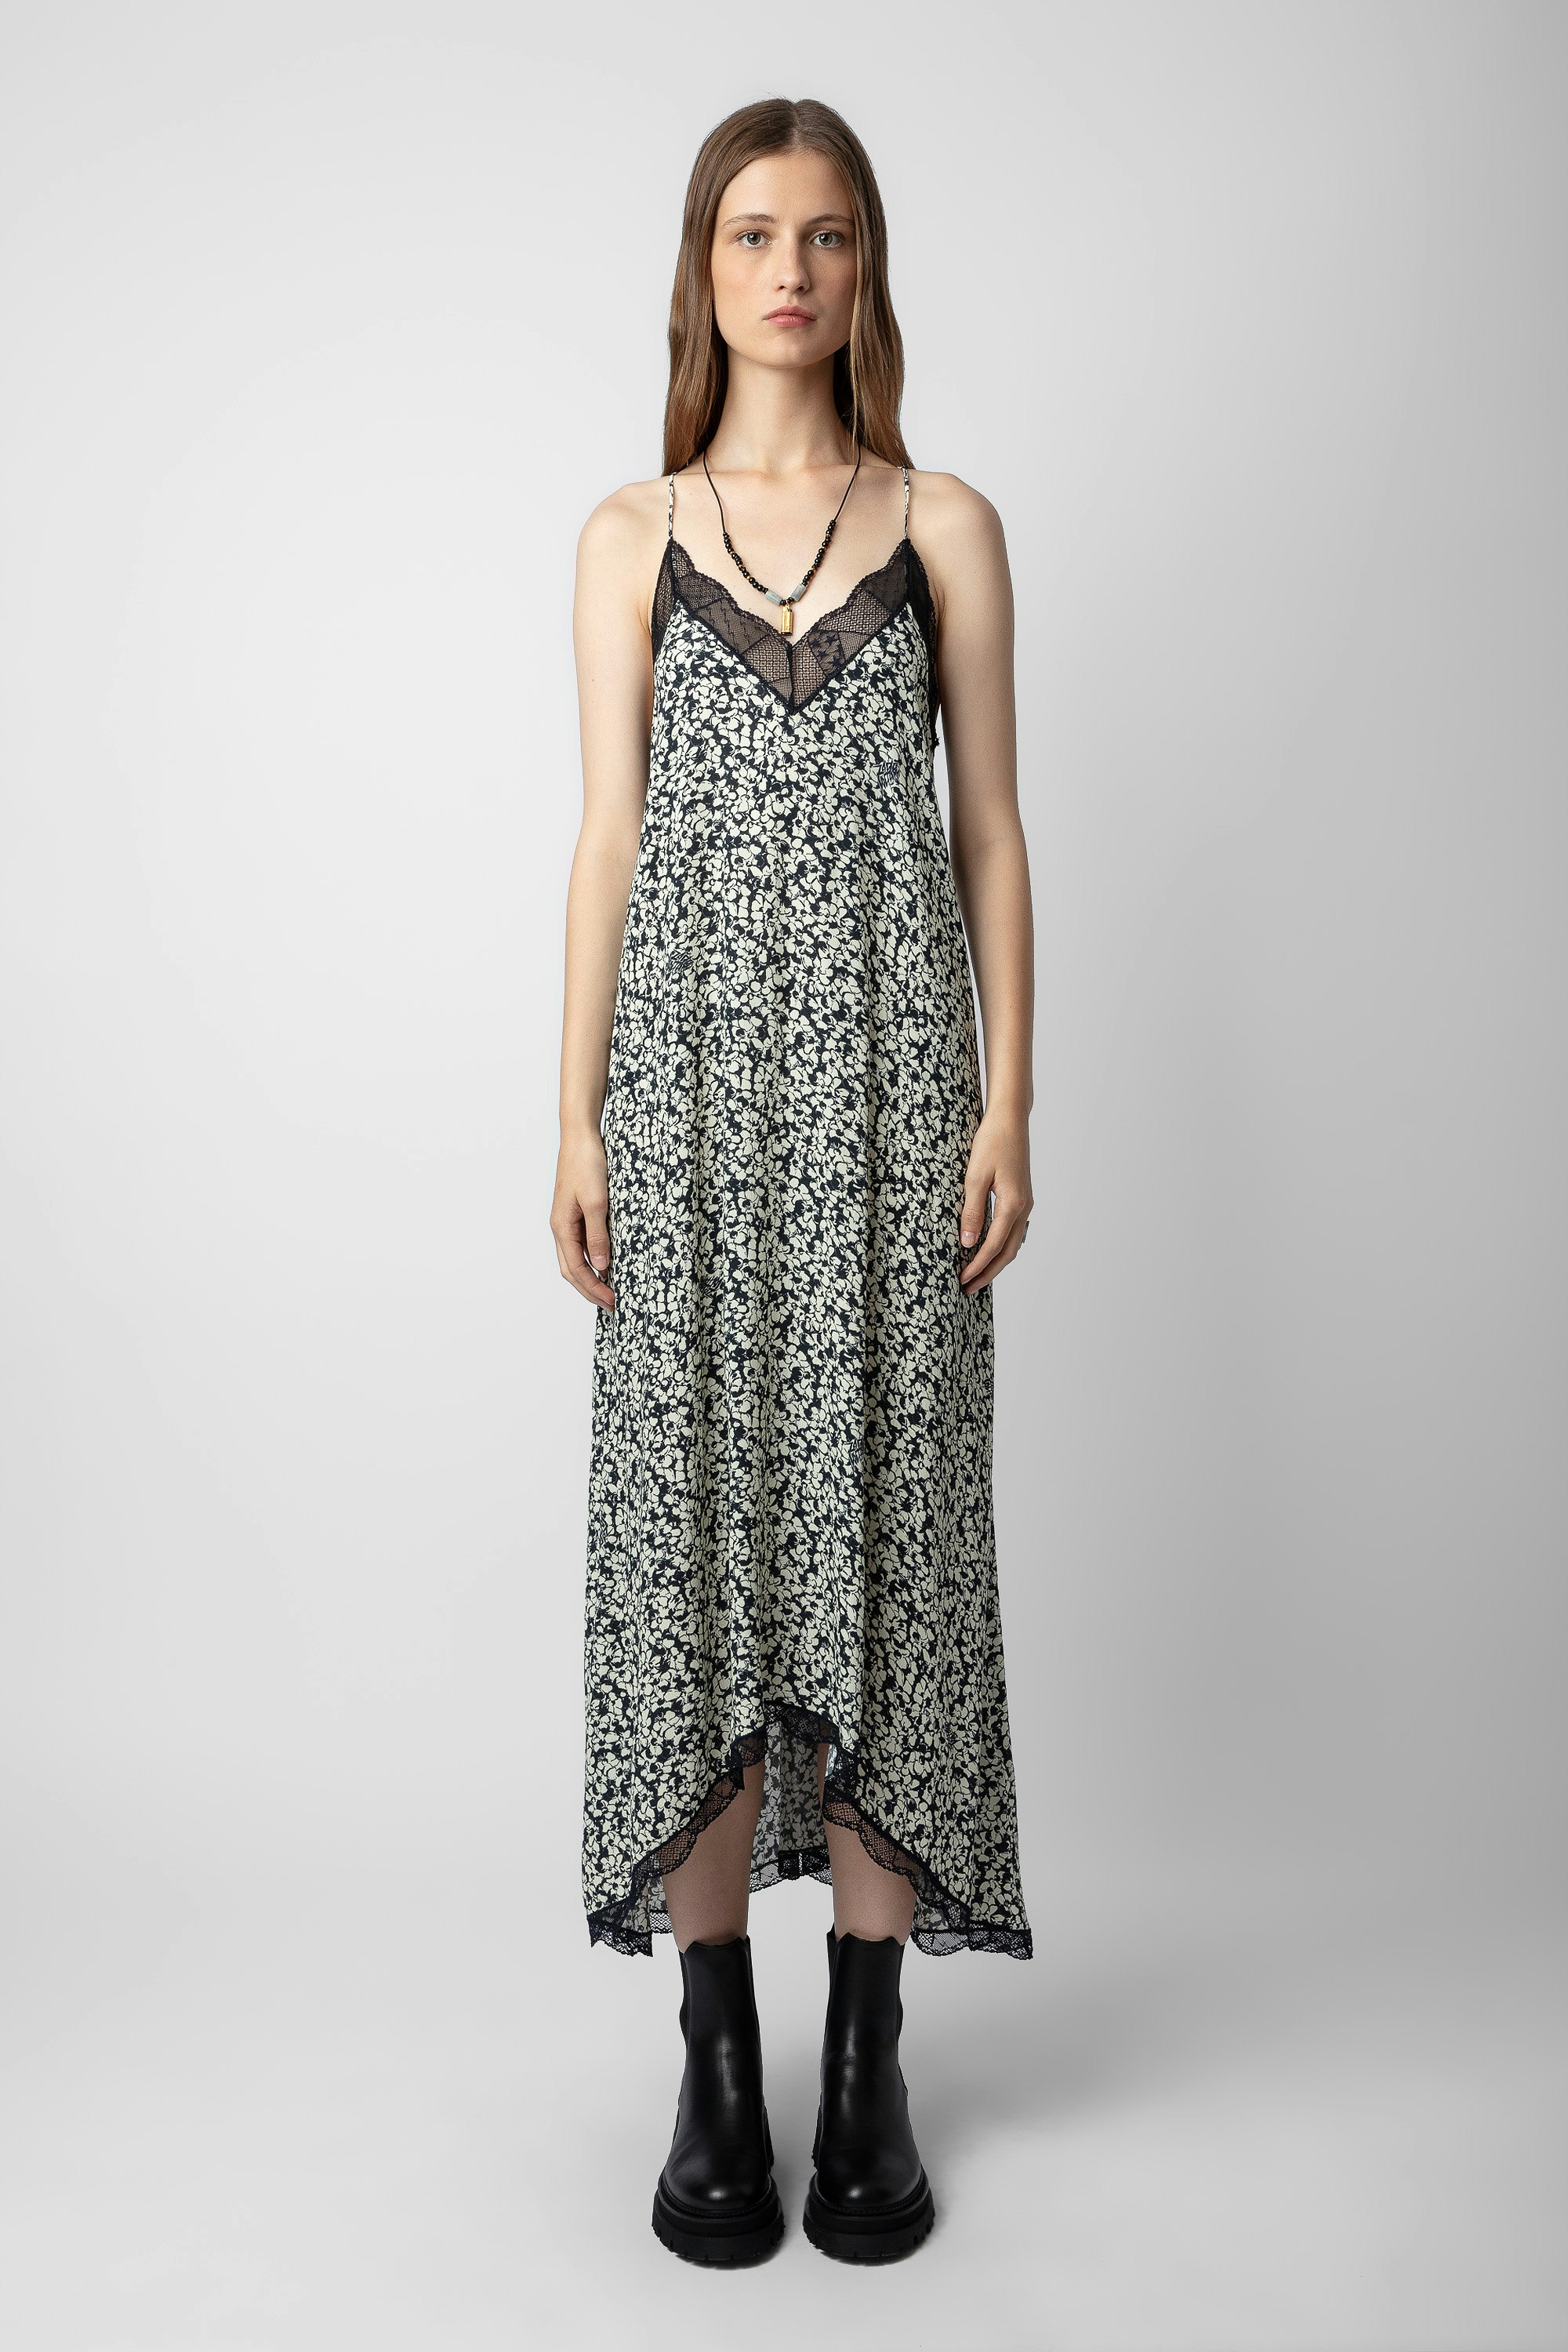 Risty Dress - Women’s long ecru floral-print dress with lace trim.